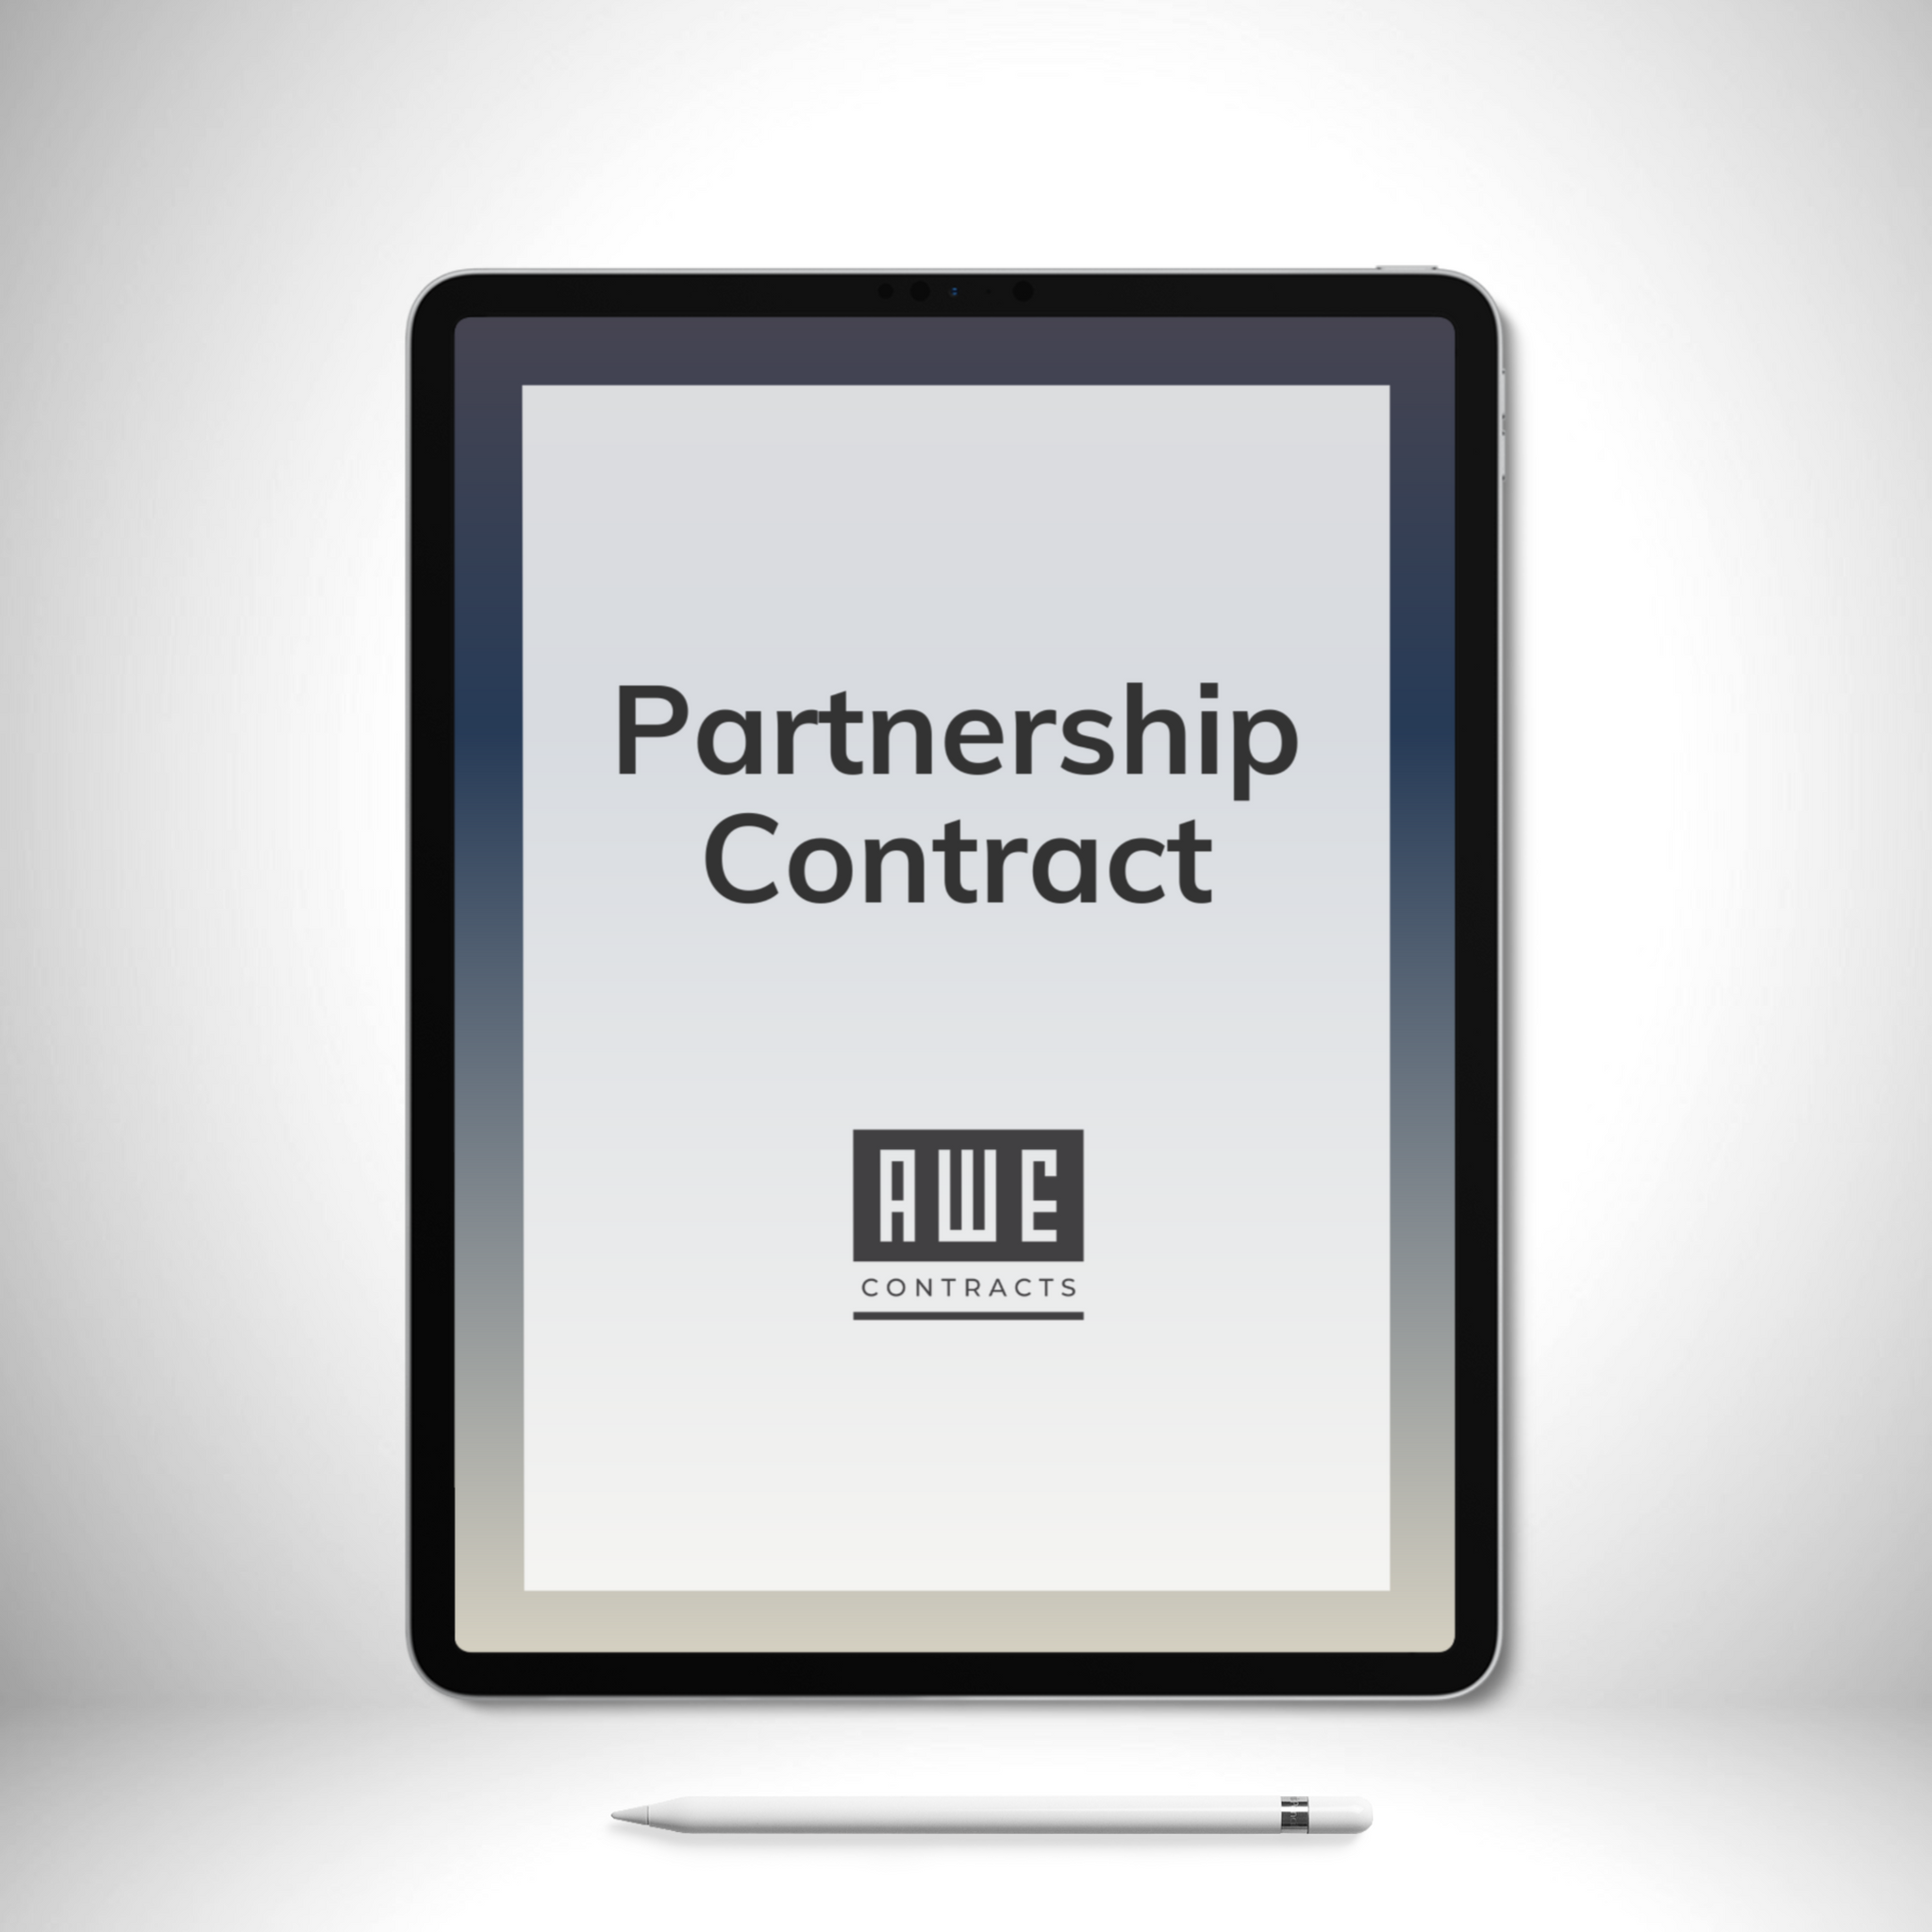 Partnership Contract